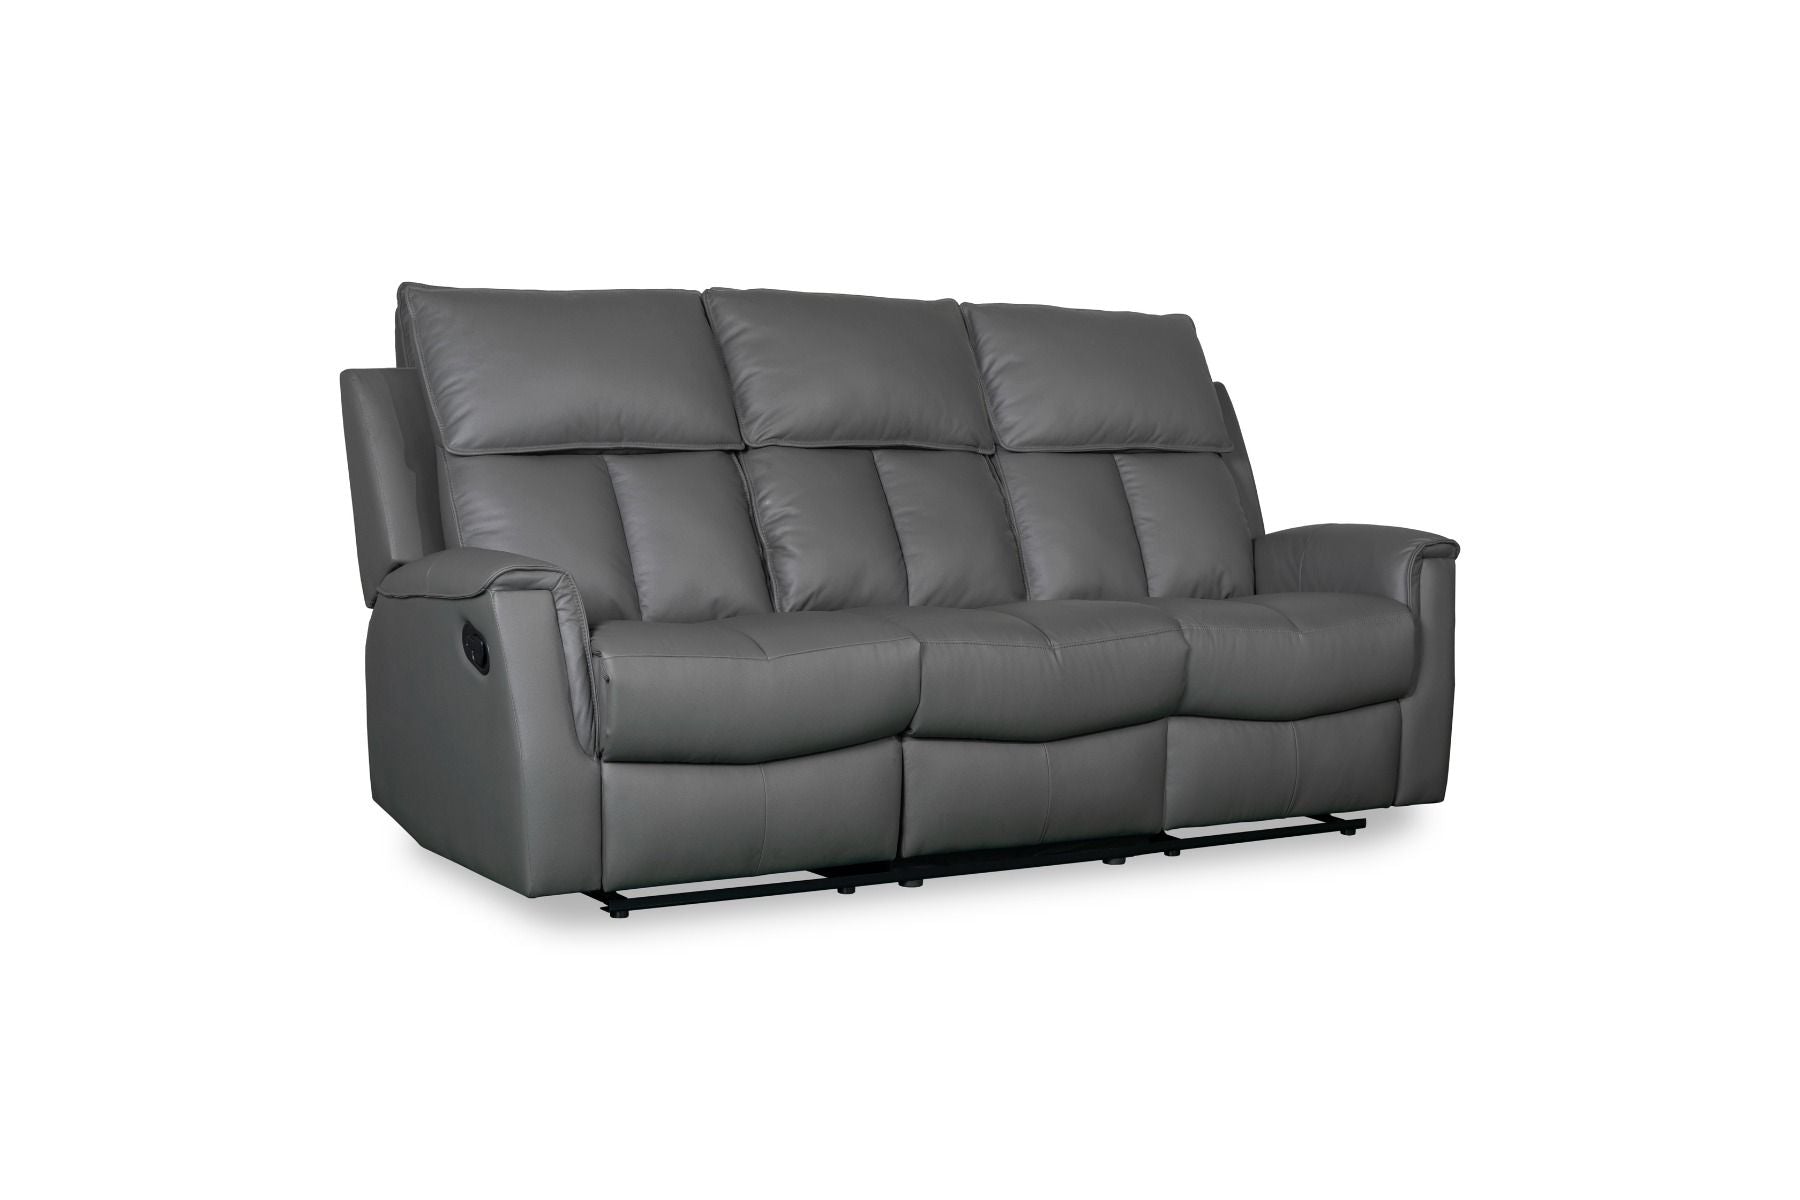 Bergamo Leather Recliner Sofa - Dark Grey